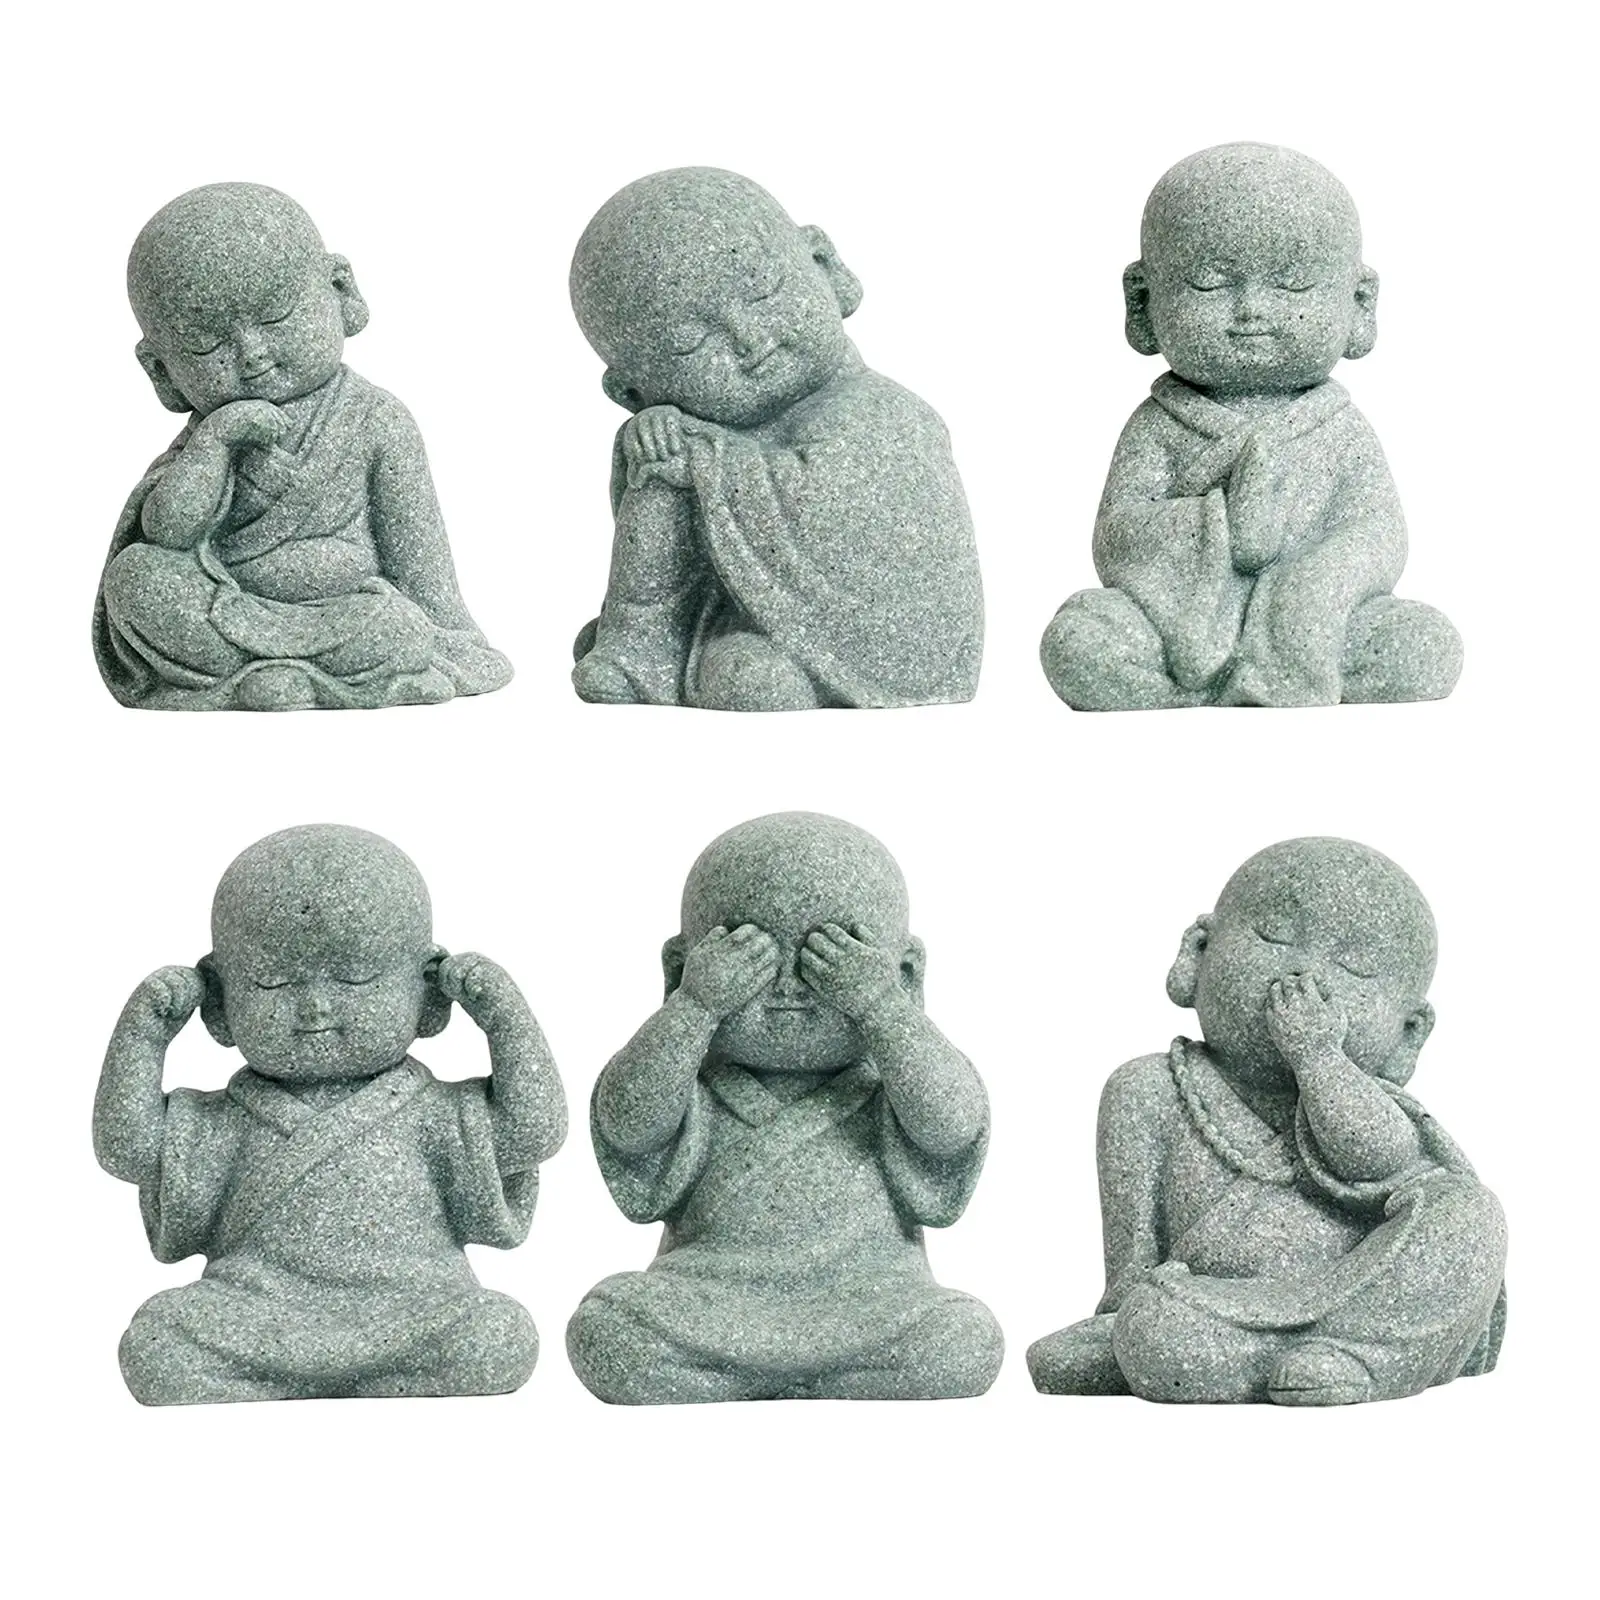 Monk Figurine Buddha Statue Ornaments Sculpture Creative Miniature Mini Decorative Sitting for Tabletop Teahouse Home Decor Desk